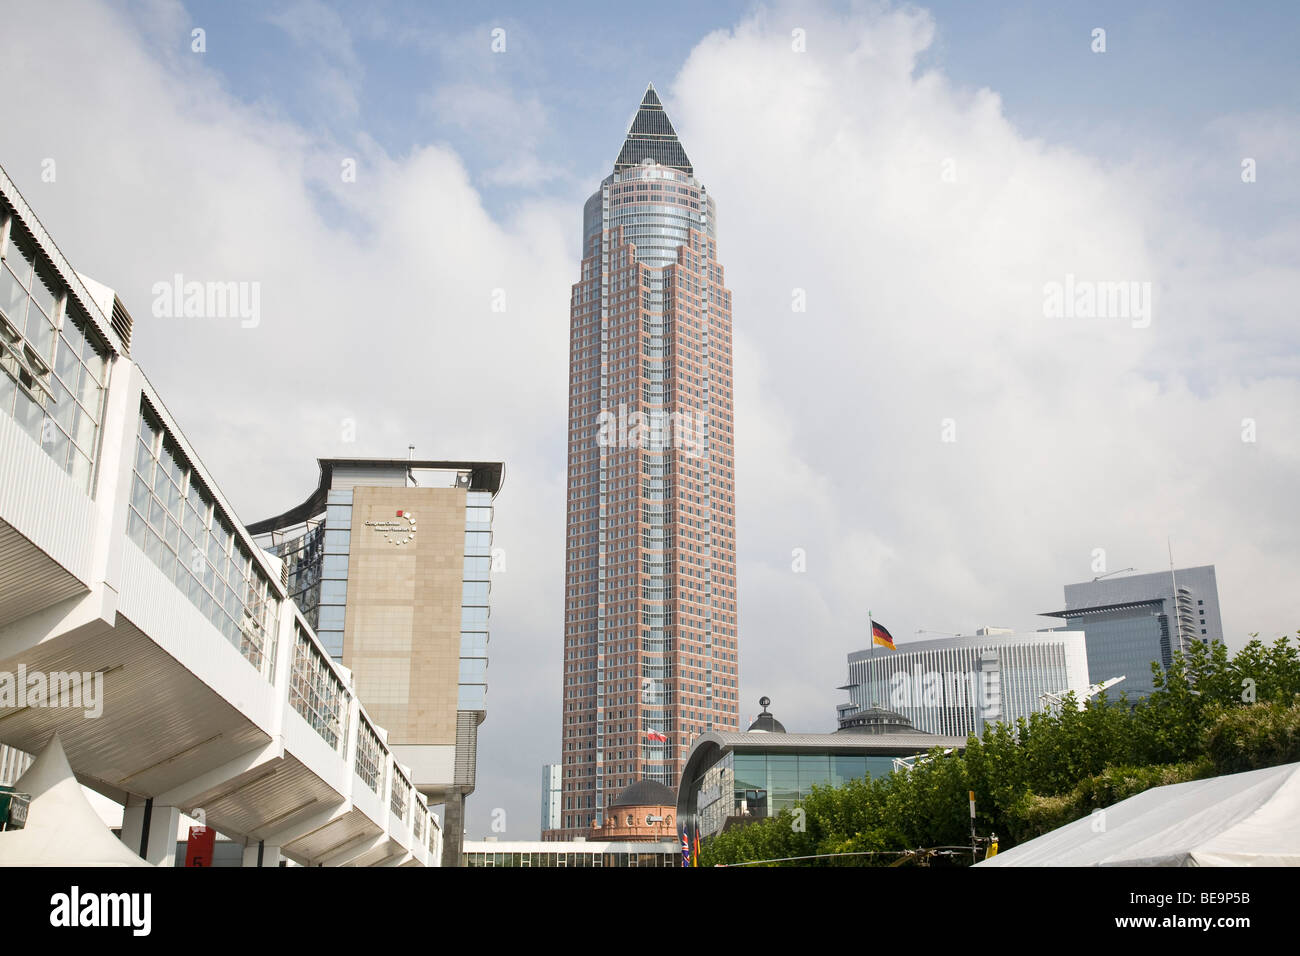 Frankfurt Messe MesseTurm Trade Fair Tower in the Messegelande complex Stock Photo